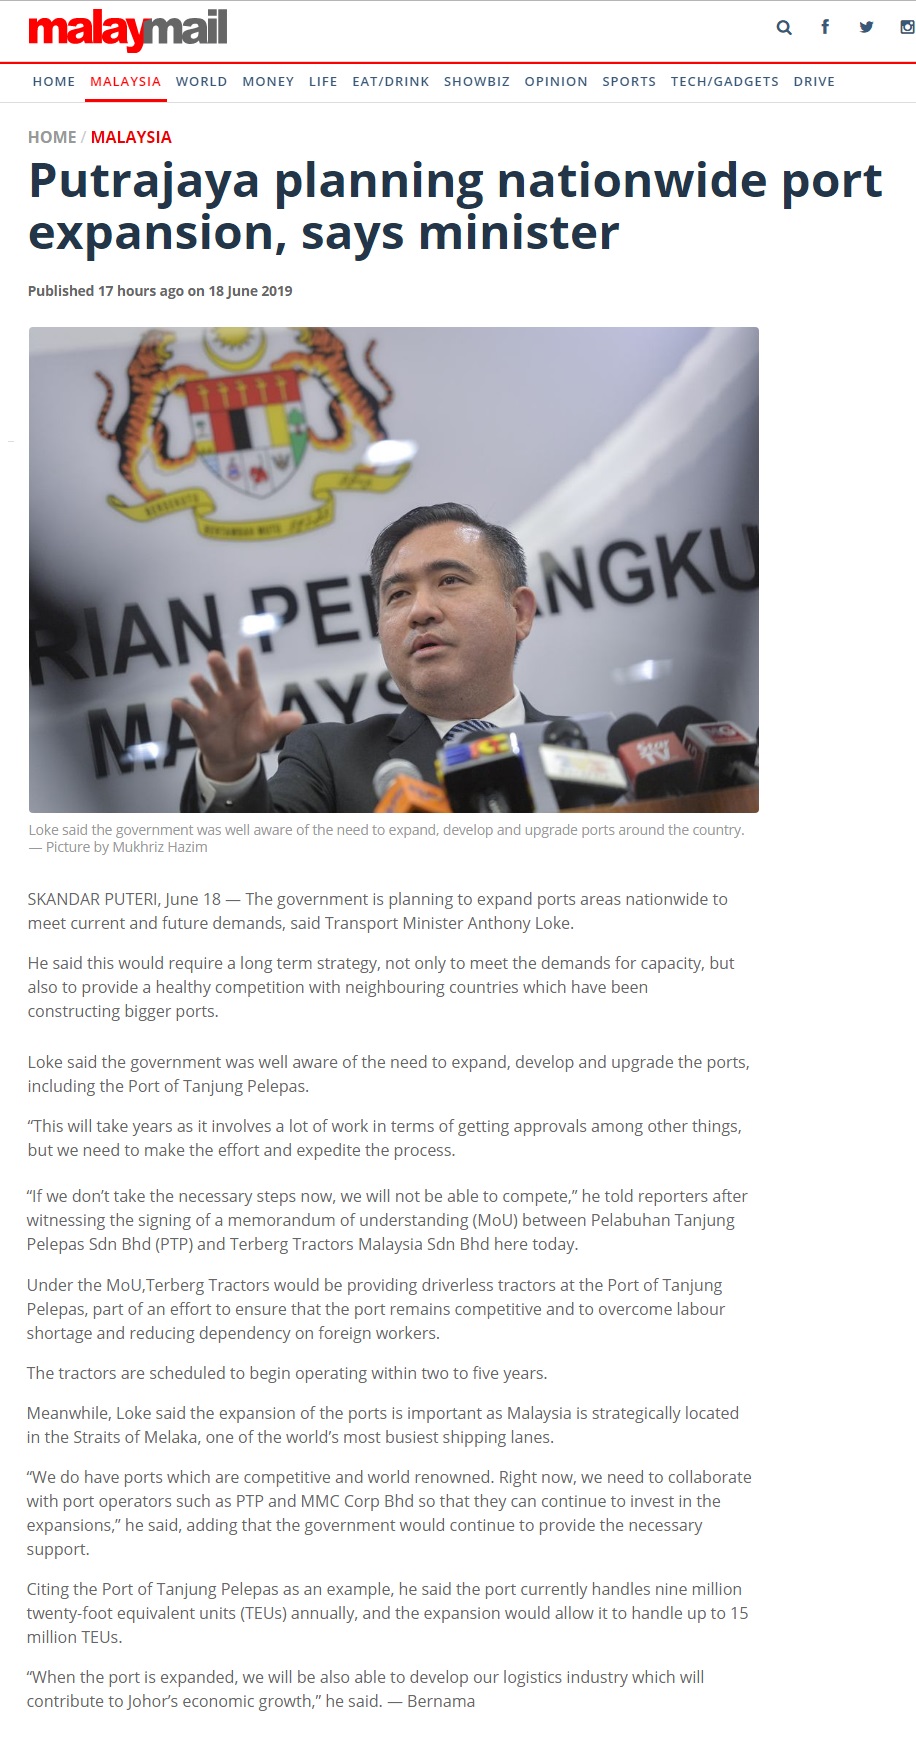 20190619-MalayMail-Putrajaya-planning-nationwide-port-expansion,-says-minister.jpg